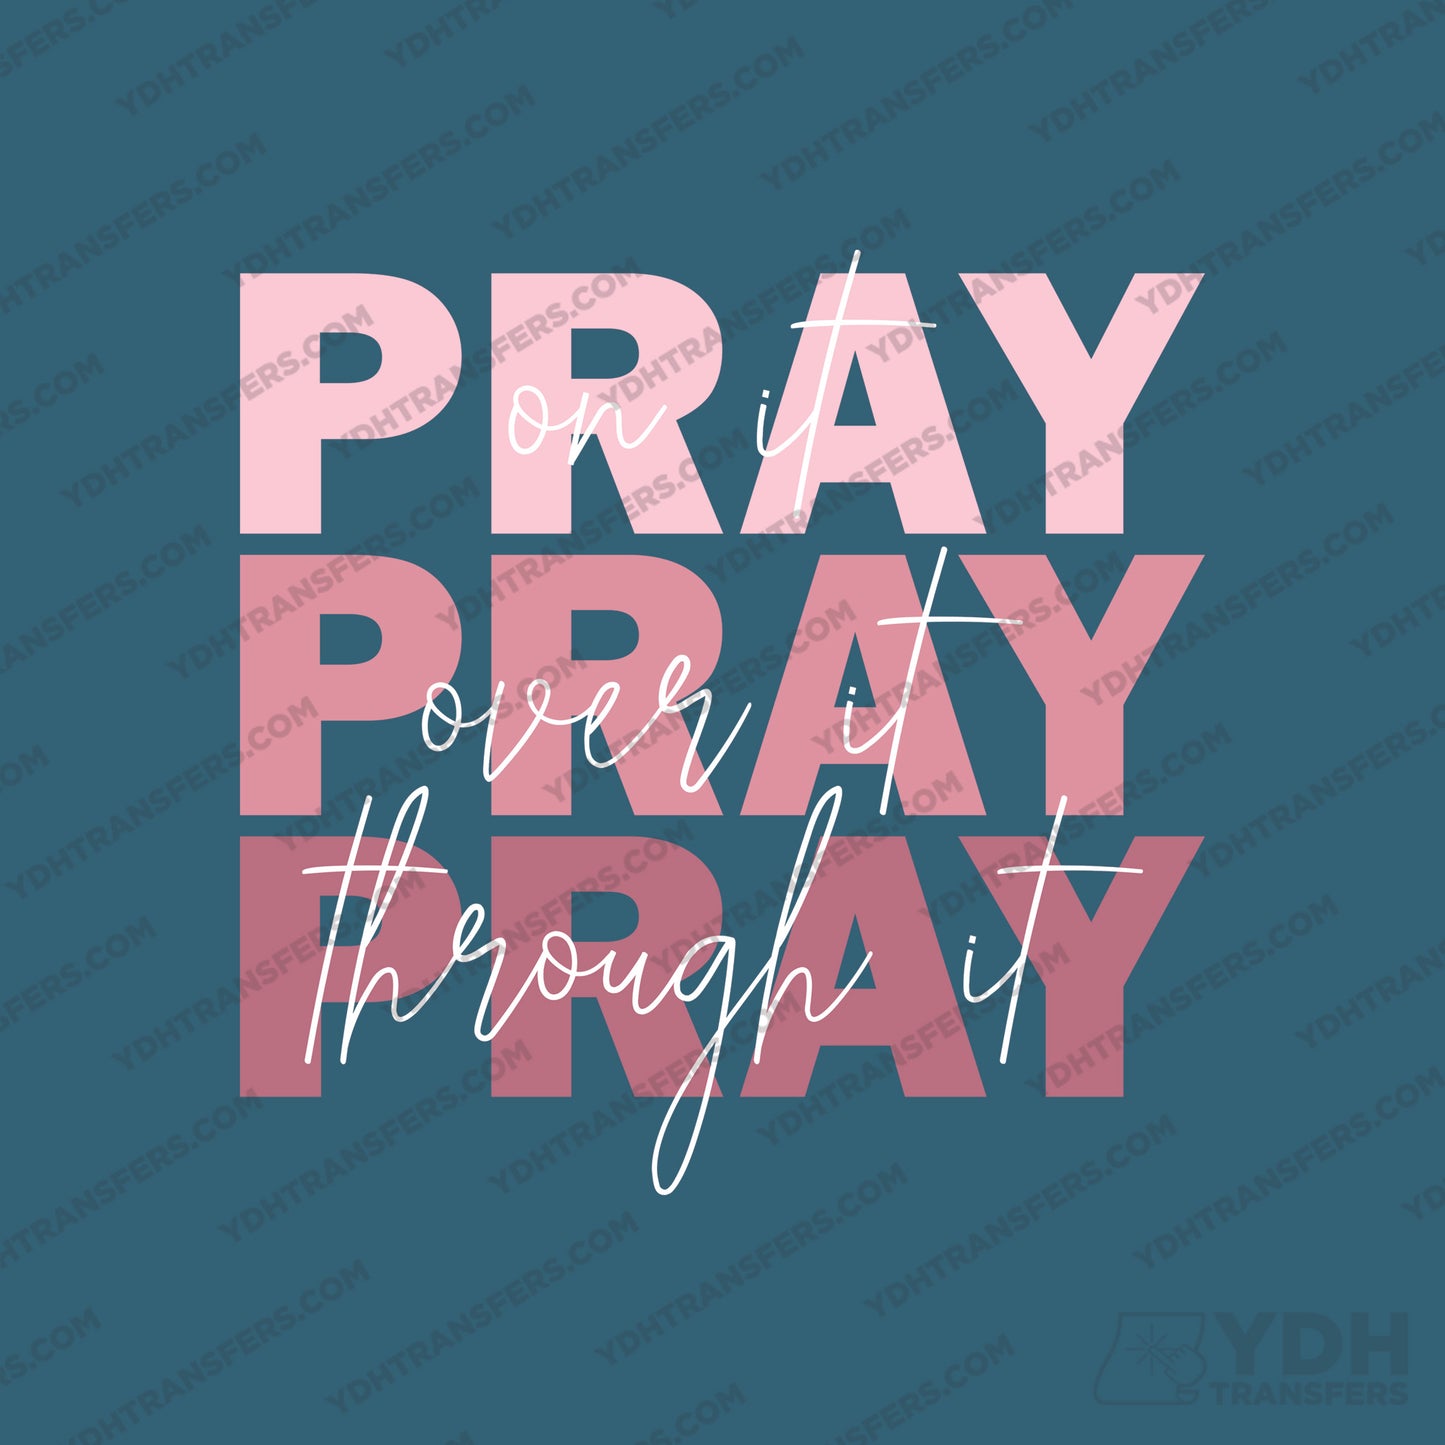 Pray on it Pray Over it Pray through It